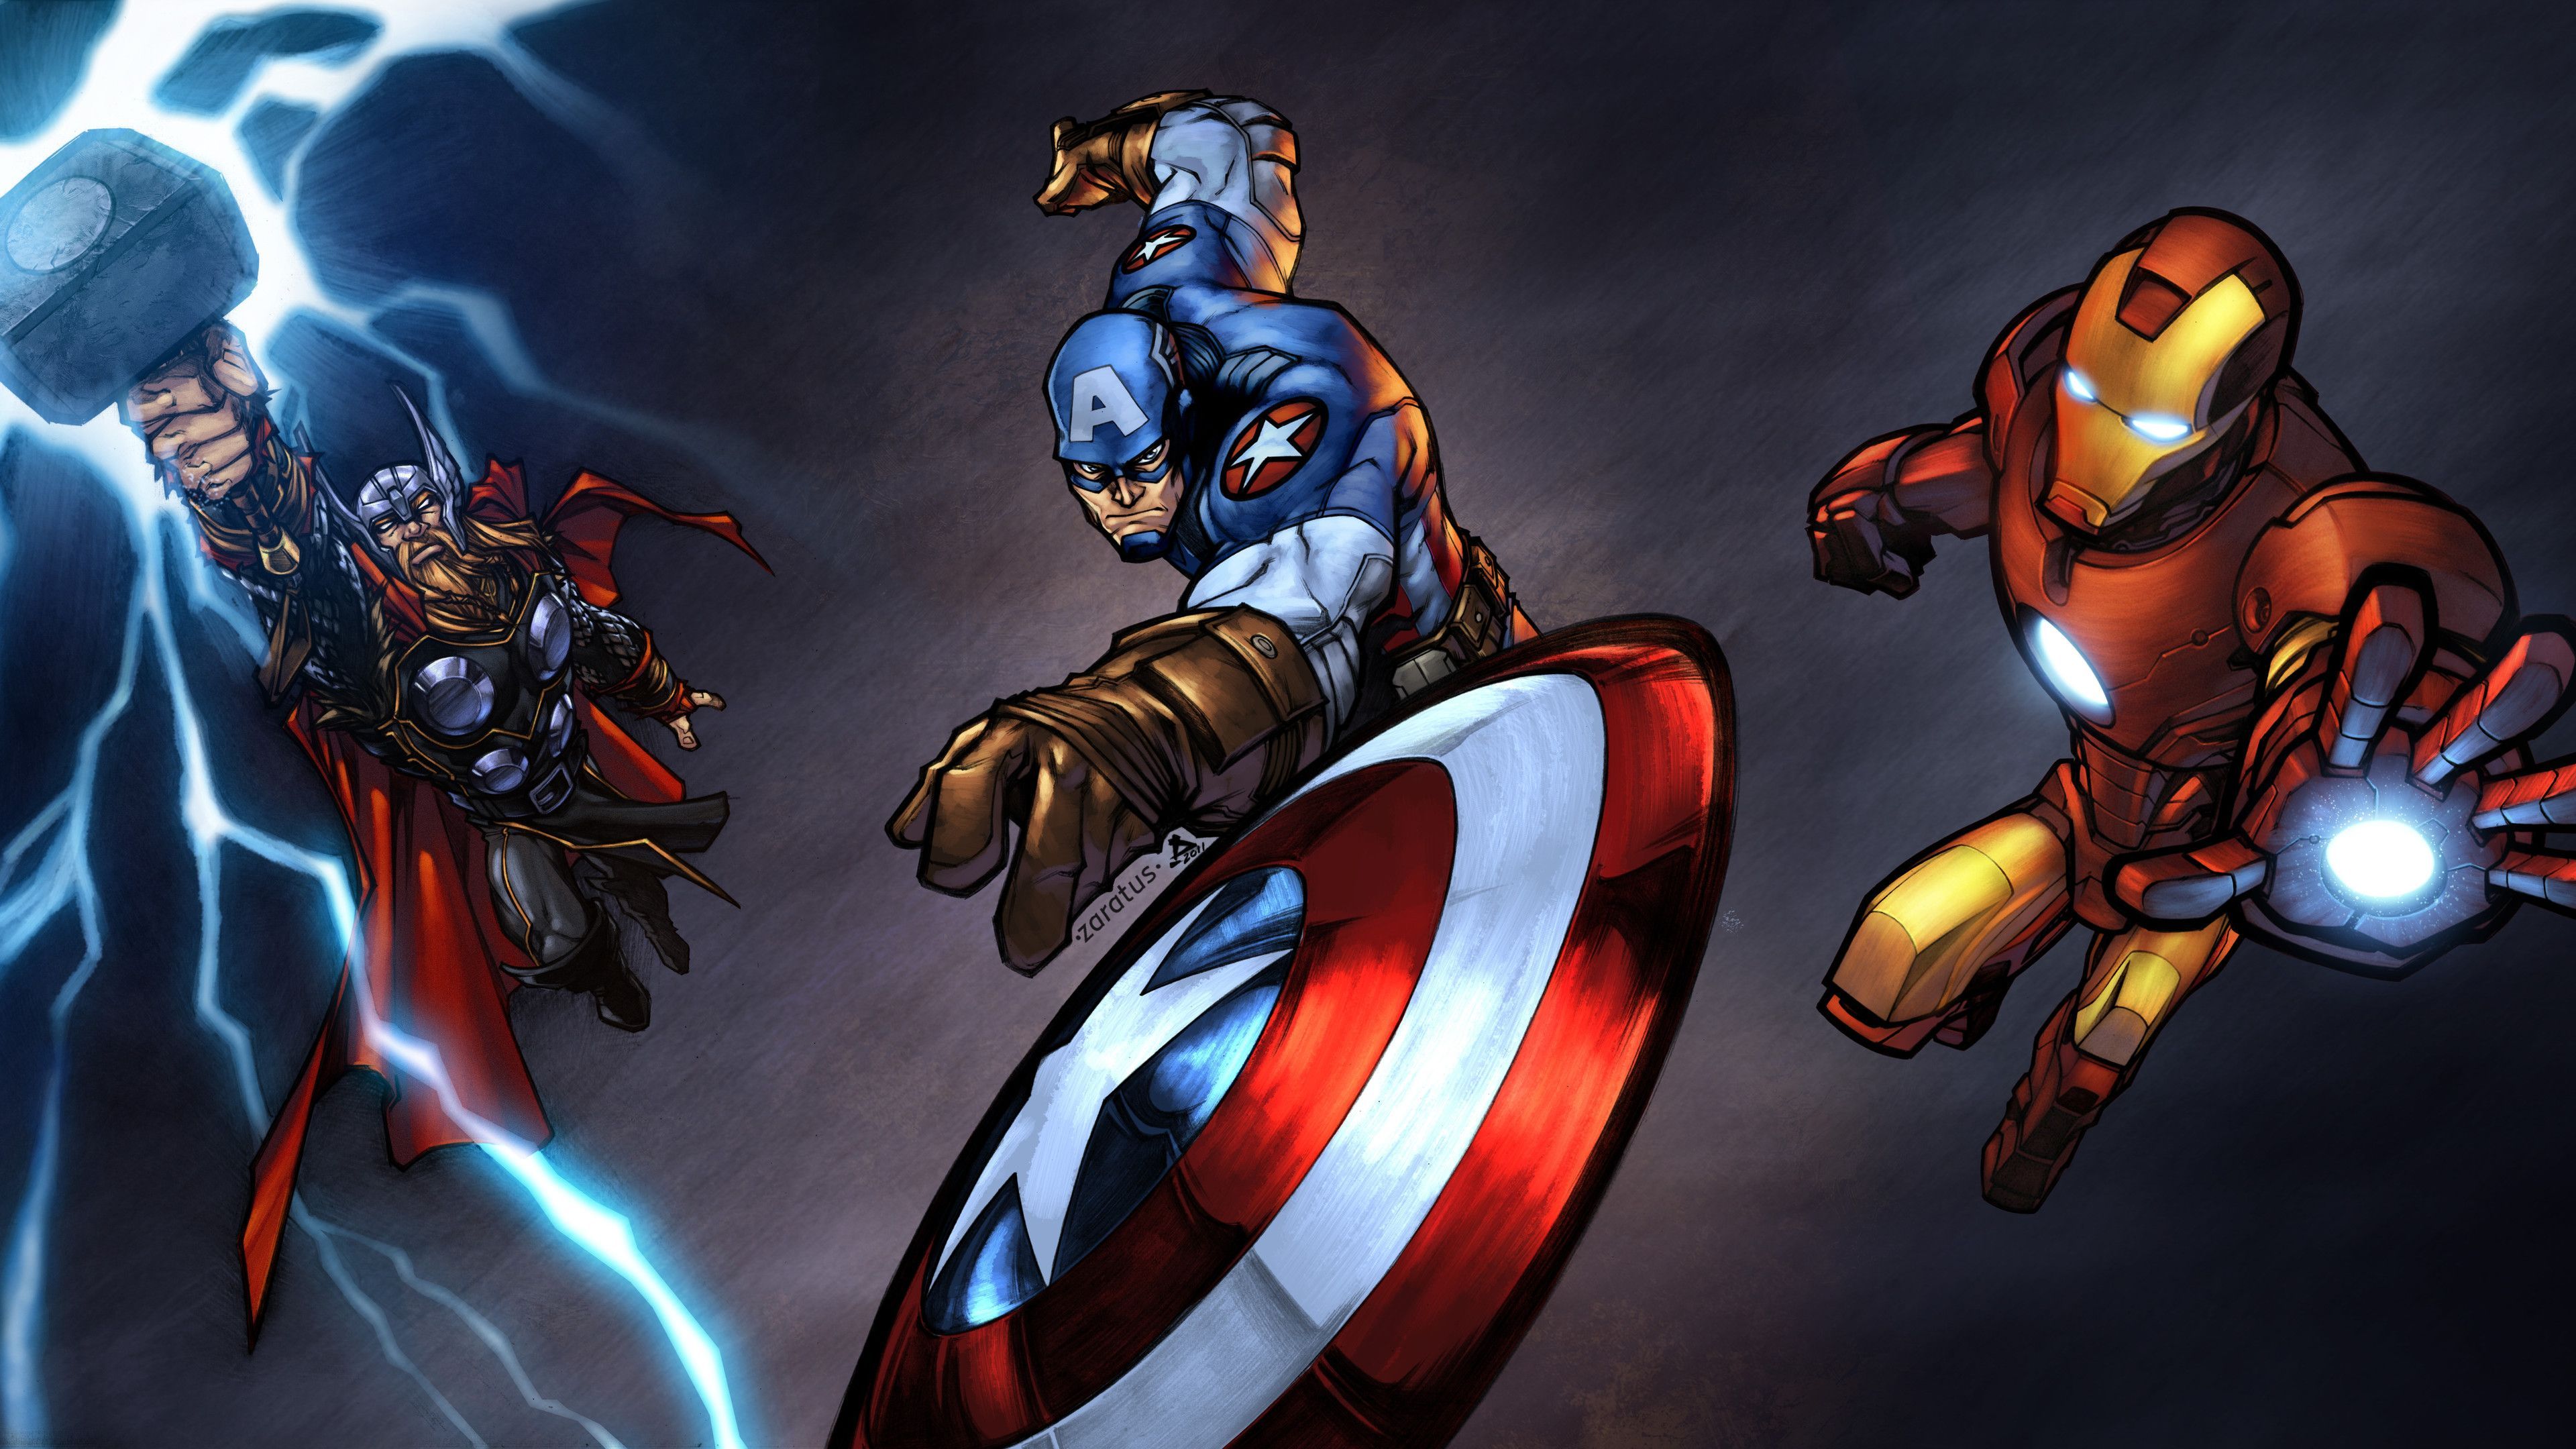 Iron Man Captain America Thor 10k Thor Wallpaper, Superheroes Wallpaper, Iron Man Wallpaper, Hd Wallpaper, Capt. Avengers Wallpaper, Avenger Artwork, Avengers